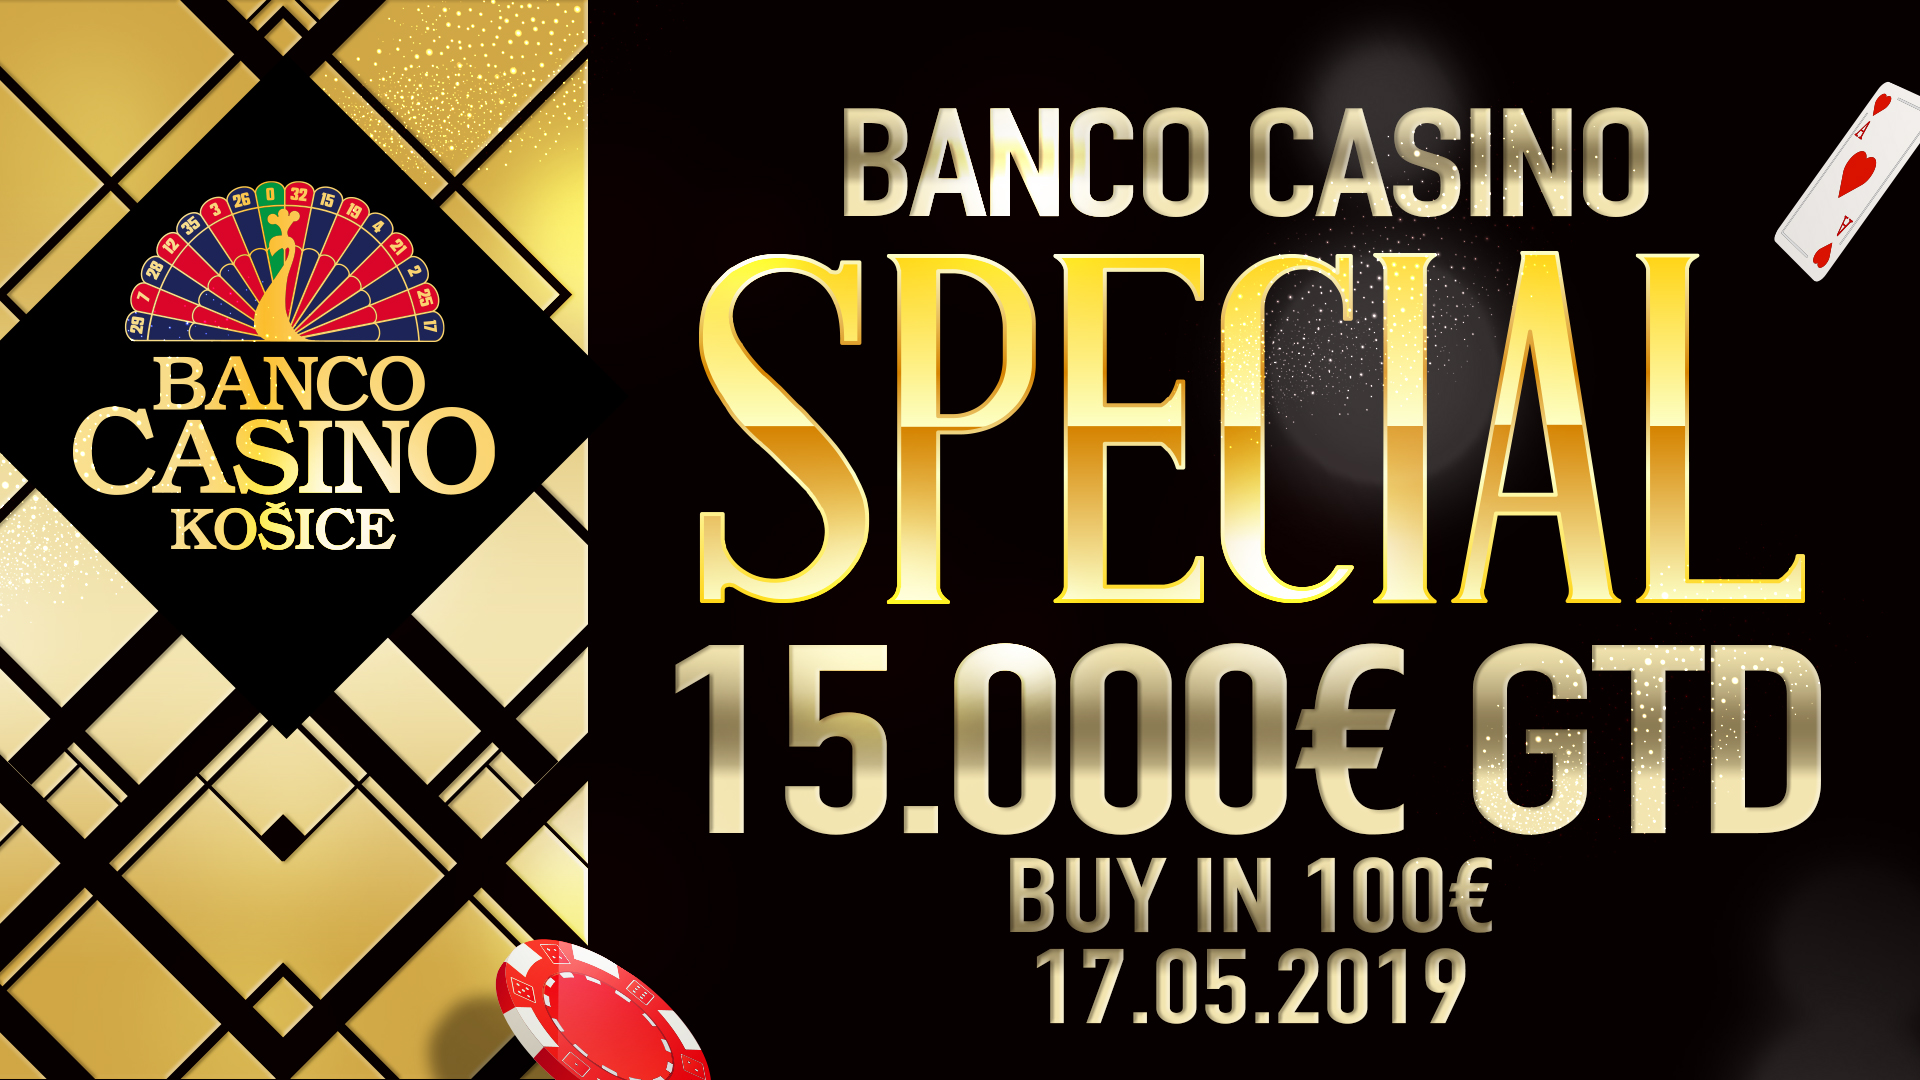 Banco Casino Special